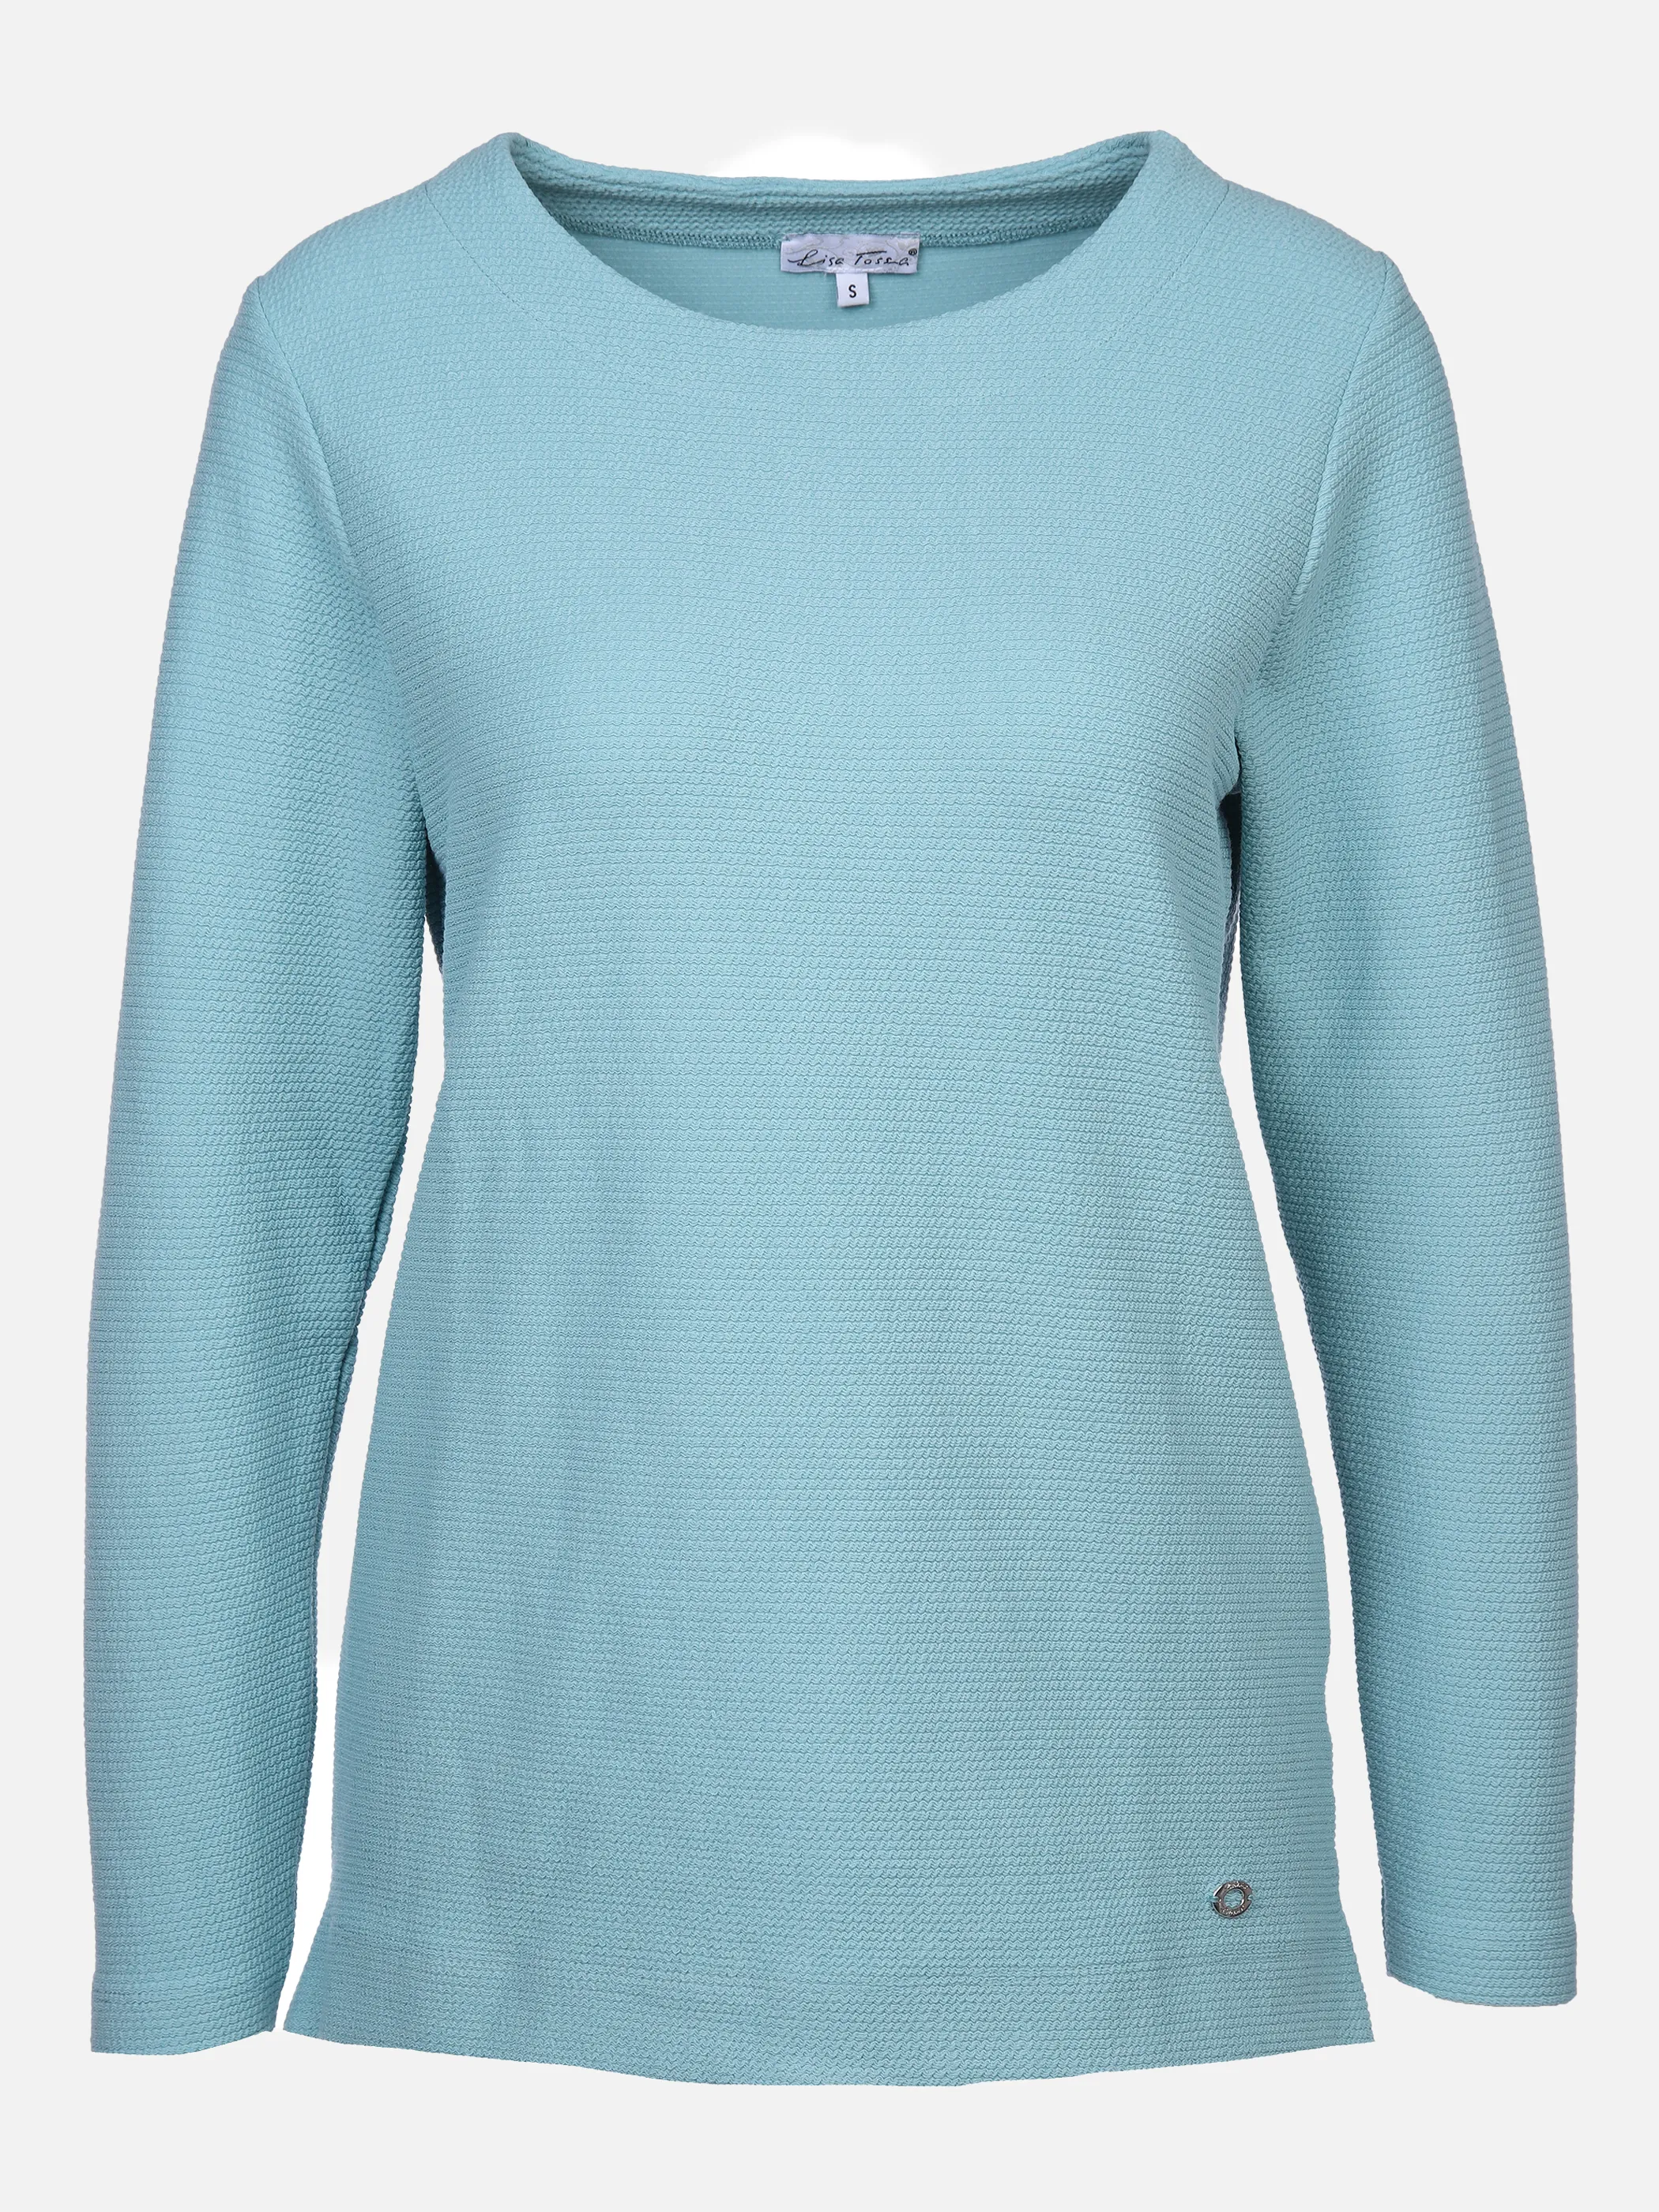 Lisa Tossa Da-Jaquardt-Sweatshirt Basic Blau 867608 MINZE 1